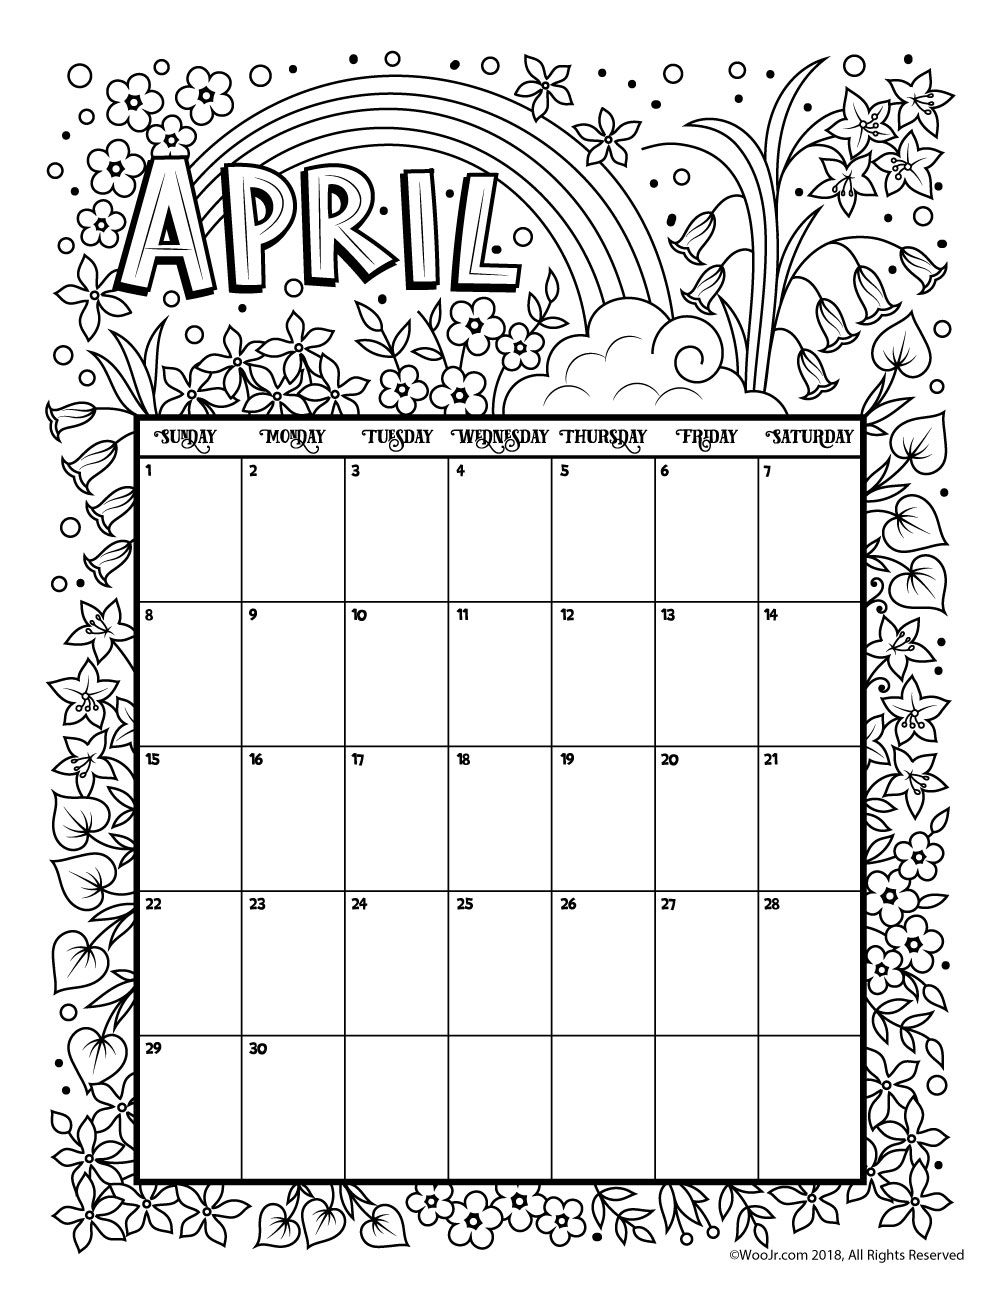 Download April Calendar Coloring Pages - Calendar For 2021 Coloring ...